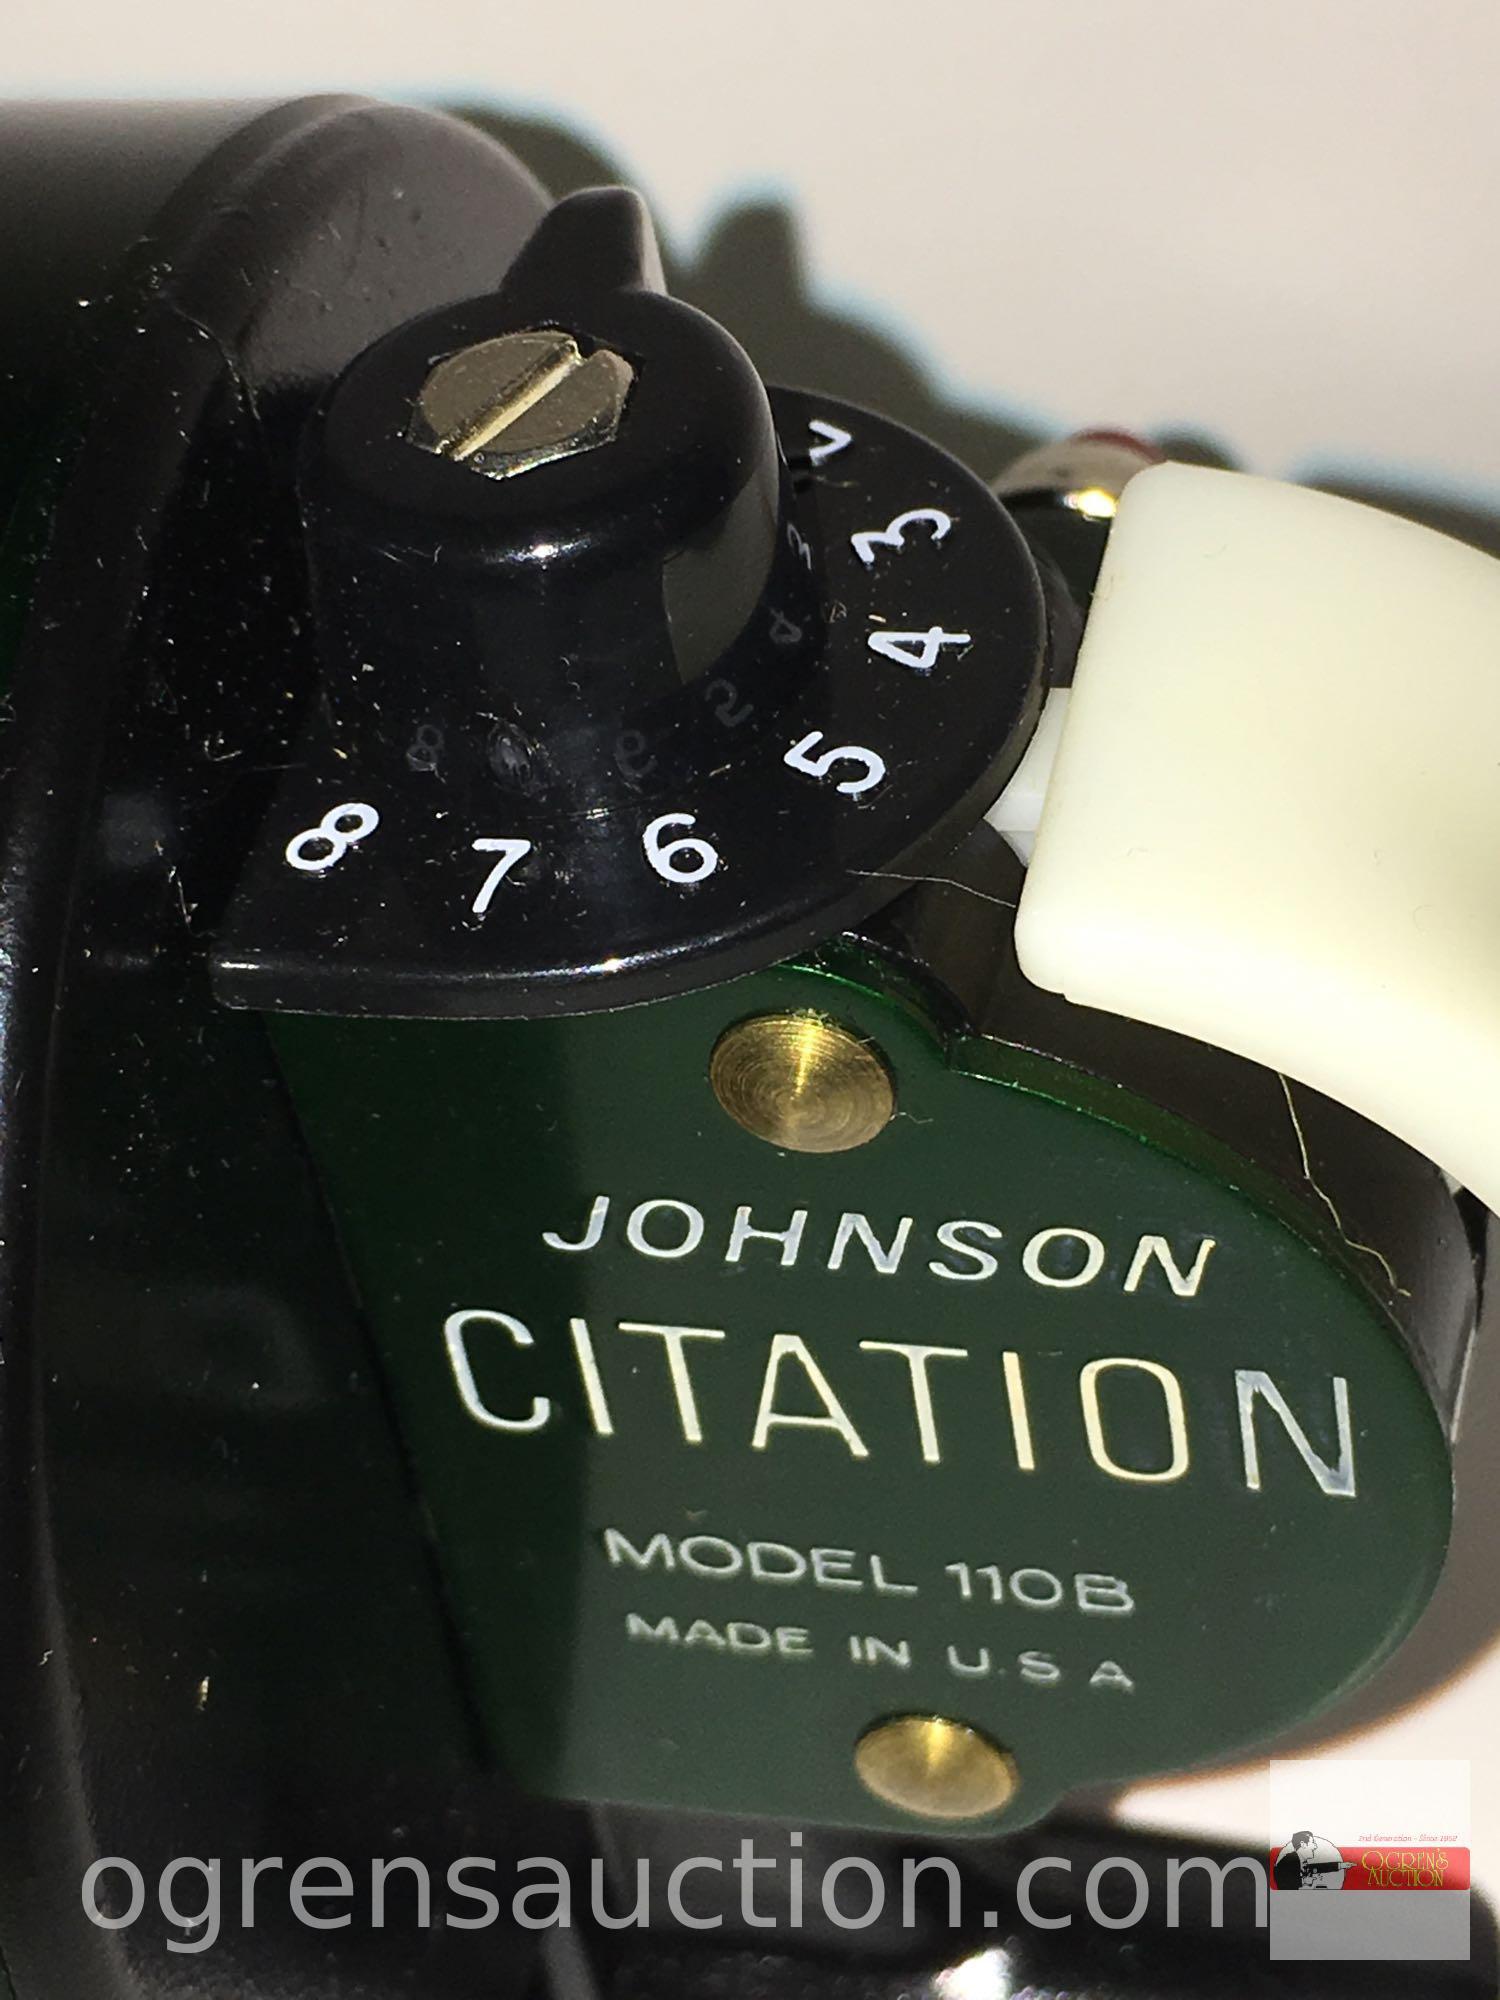 Fishing - Reels - Johnson Spin Cast Reel, Citation model 110B, complete with 12lb test siren line